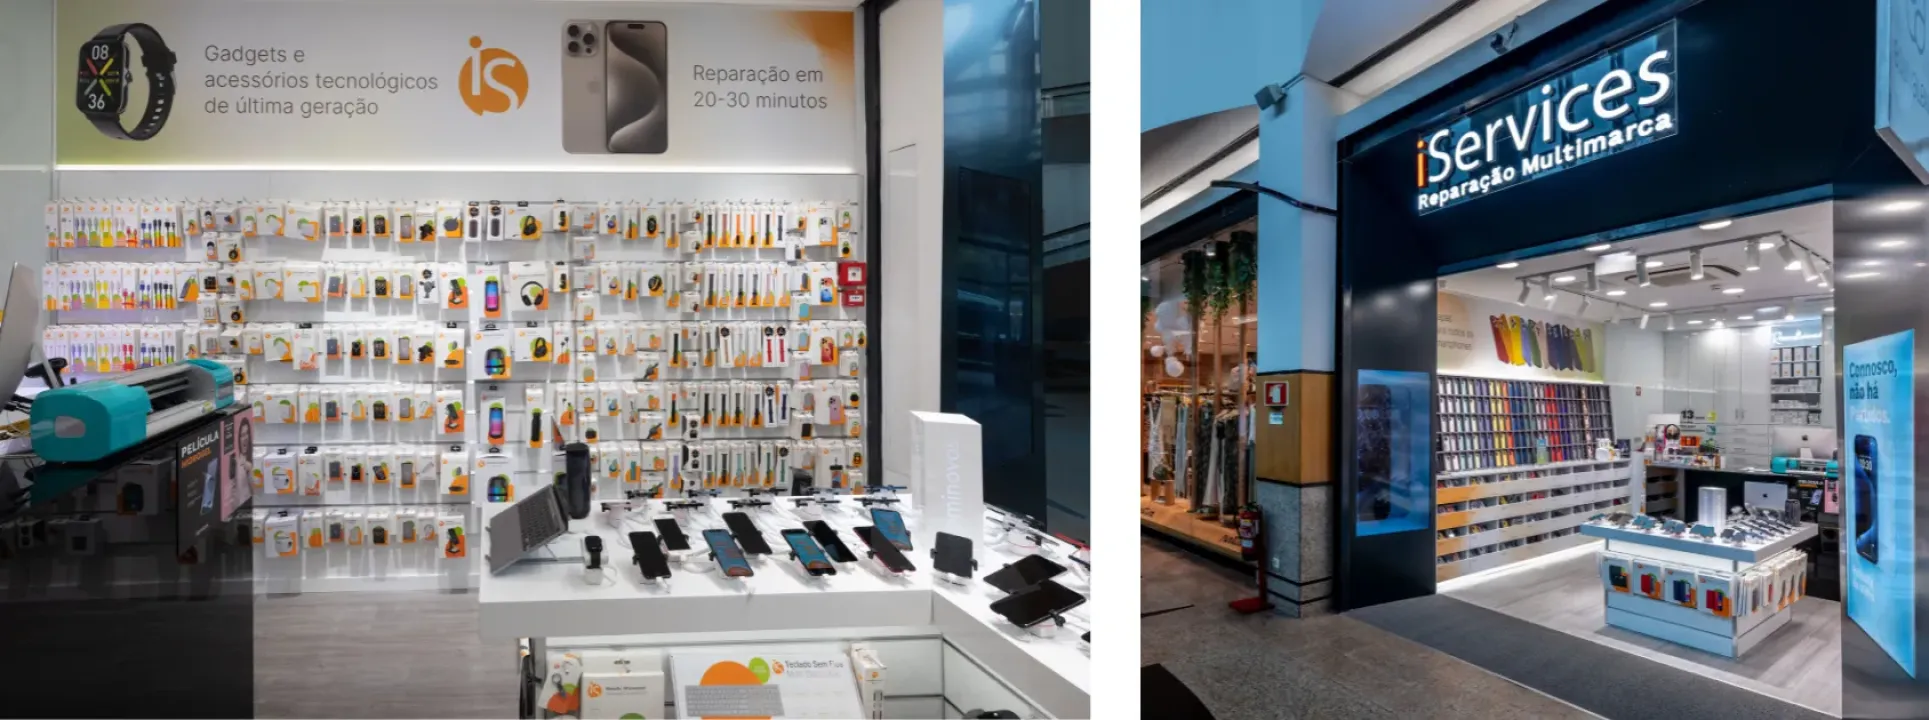 iServices abre segunda loja em Guimarães  blog post